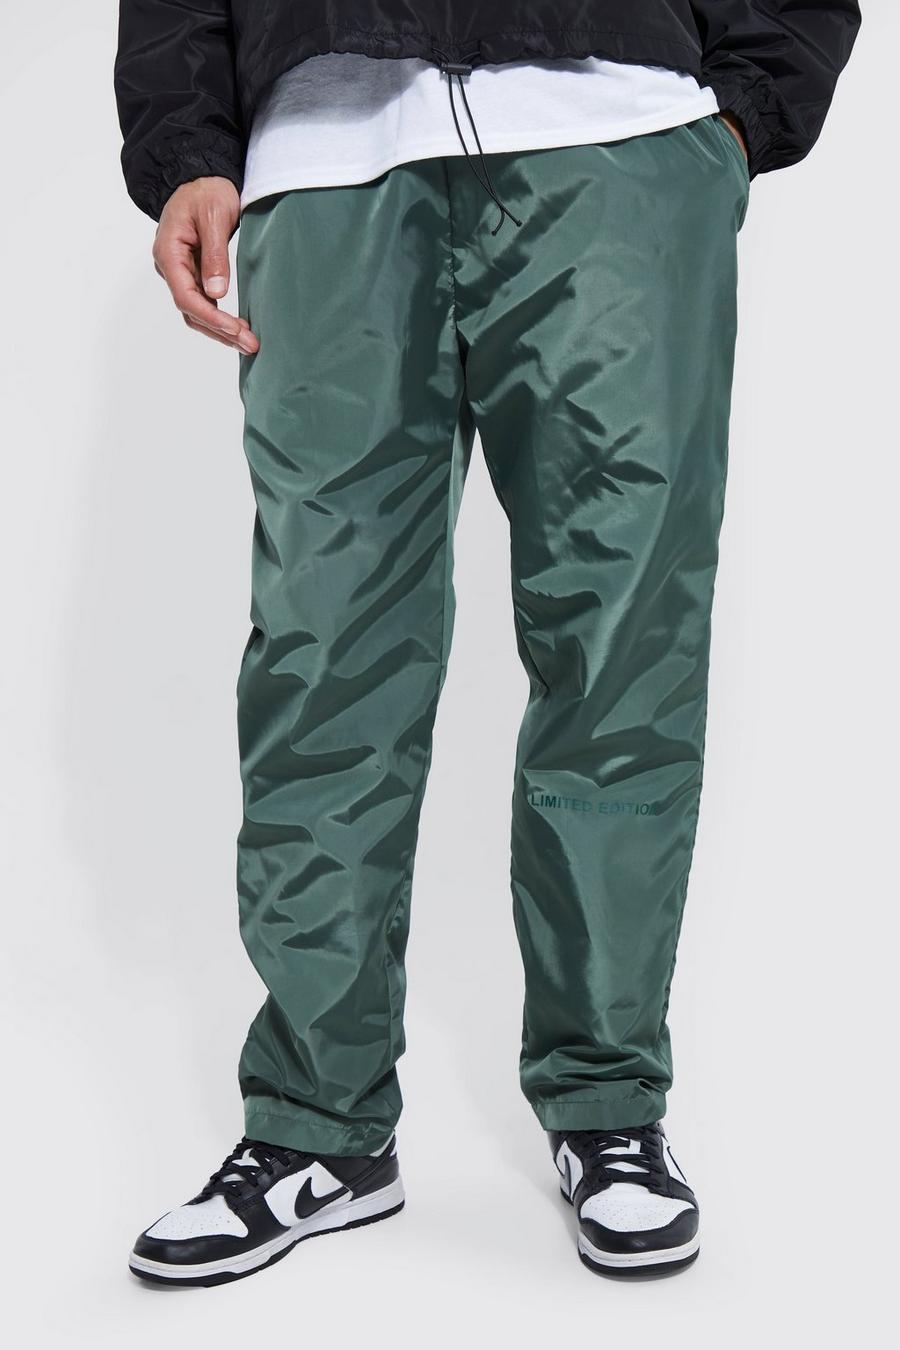 Tall - Pantalon à taille élastique - Limited Edition, Forest